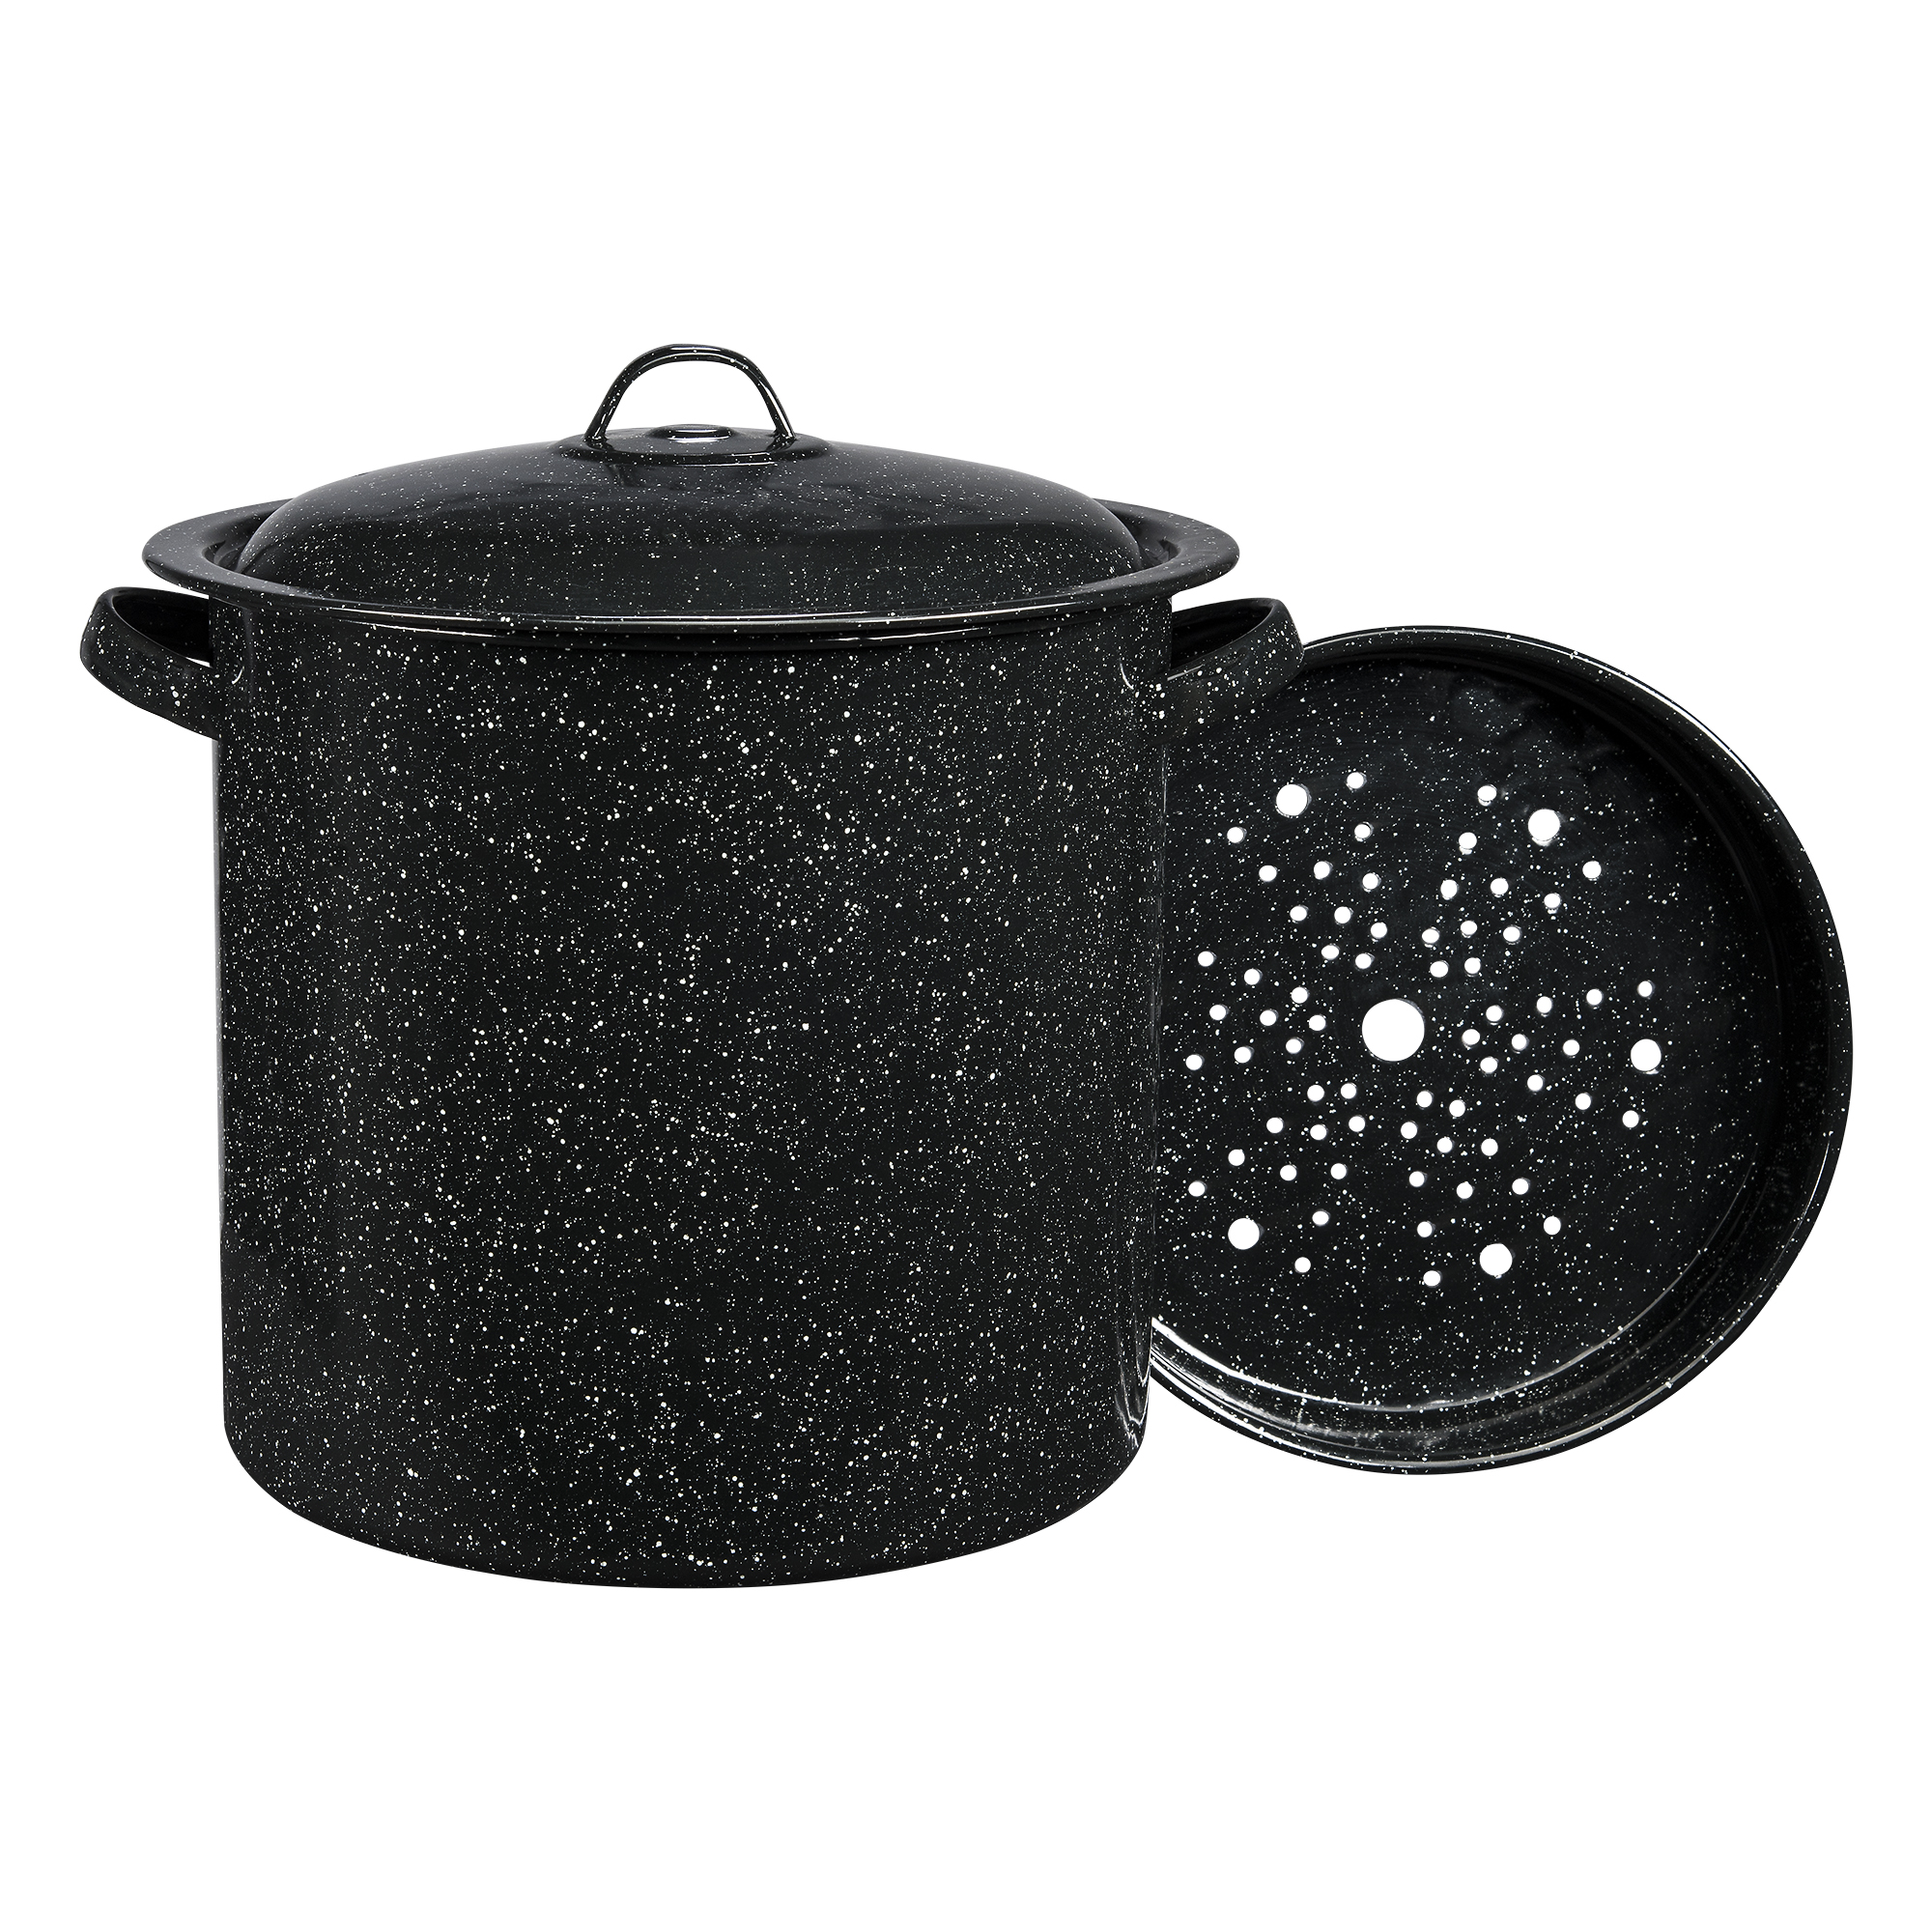 Granite Ware Enamel on Steel Multiuse Pot, Seafood / Tamale / Stock Pot includes steamer insert, 15.5-Quart, Black - image 1 of 5